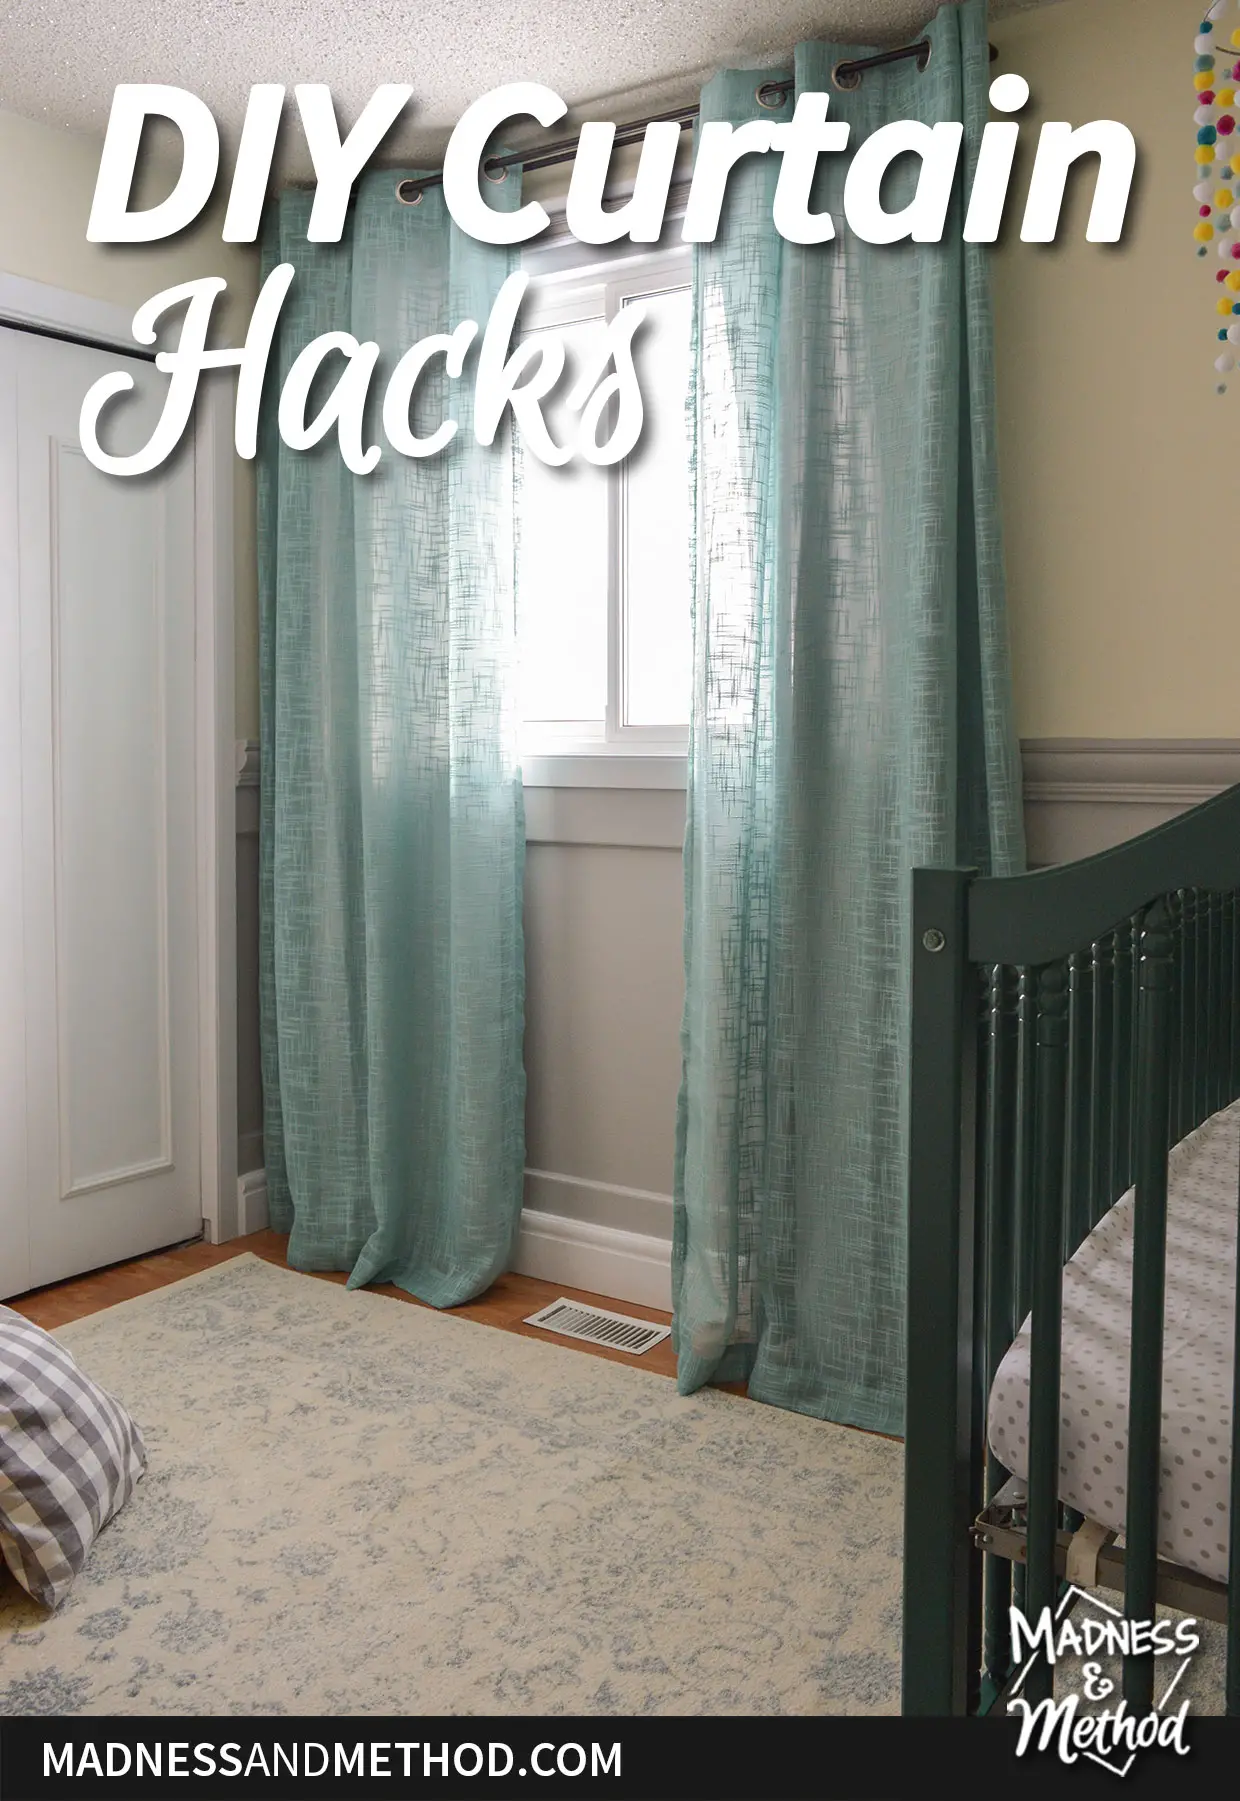 diy curtain hacks text overlay on window with teal curtains in nursery